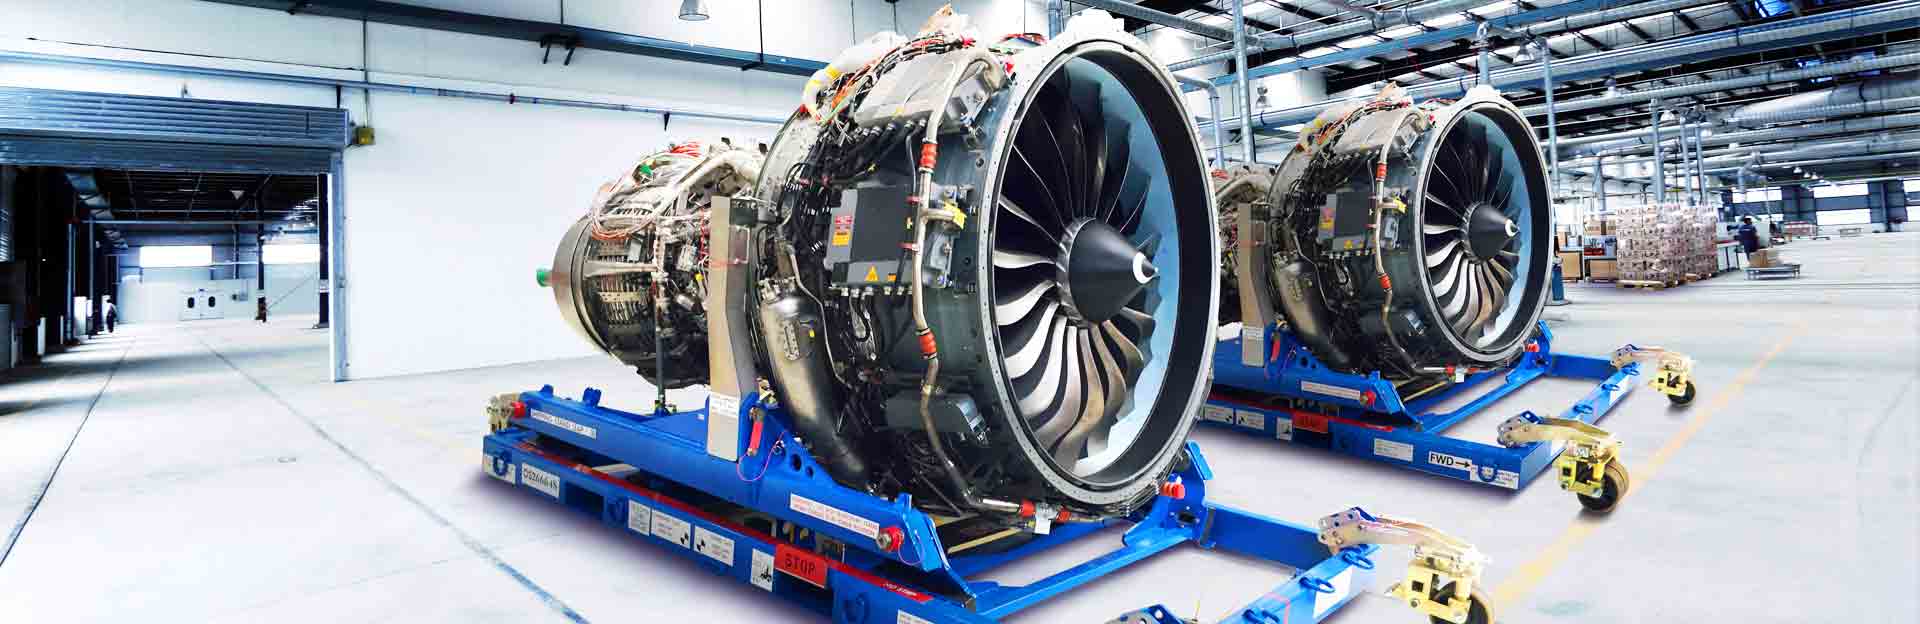 Dedienne Aerospace Leap-1B engine stands